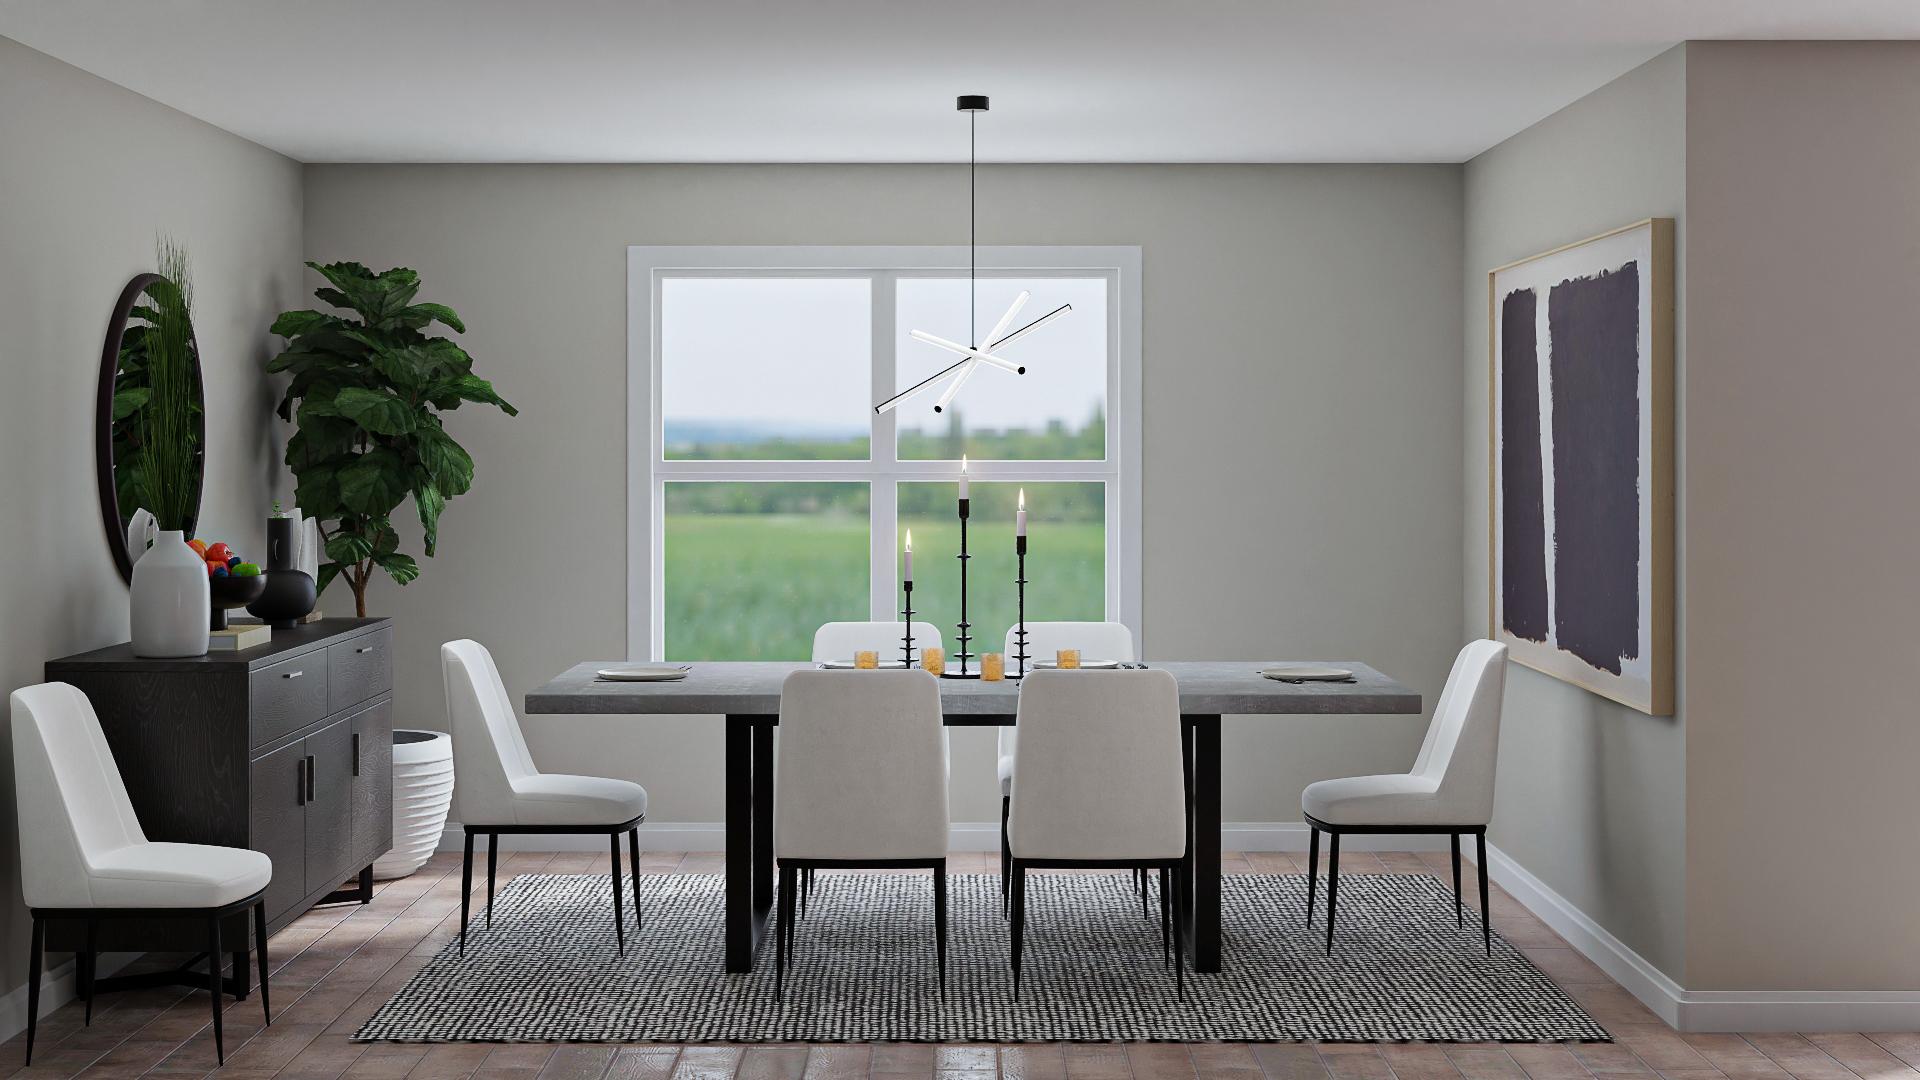 Oversized Art Dominates This Contemporary Dining Room Design